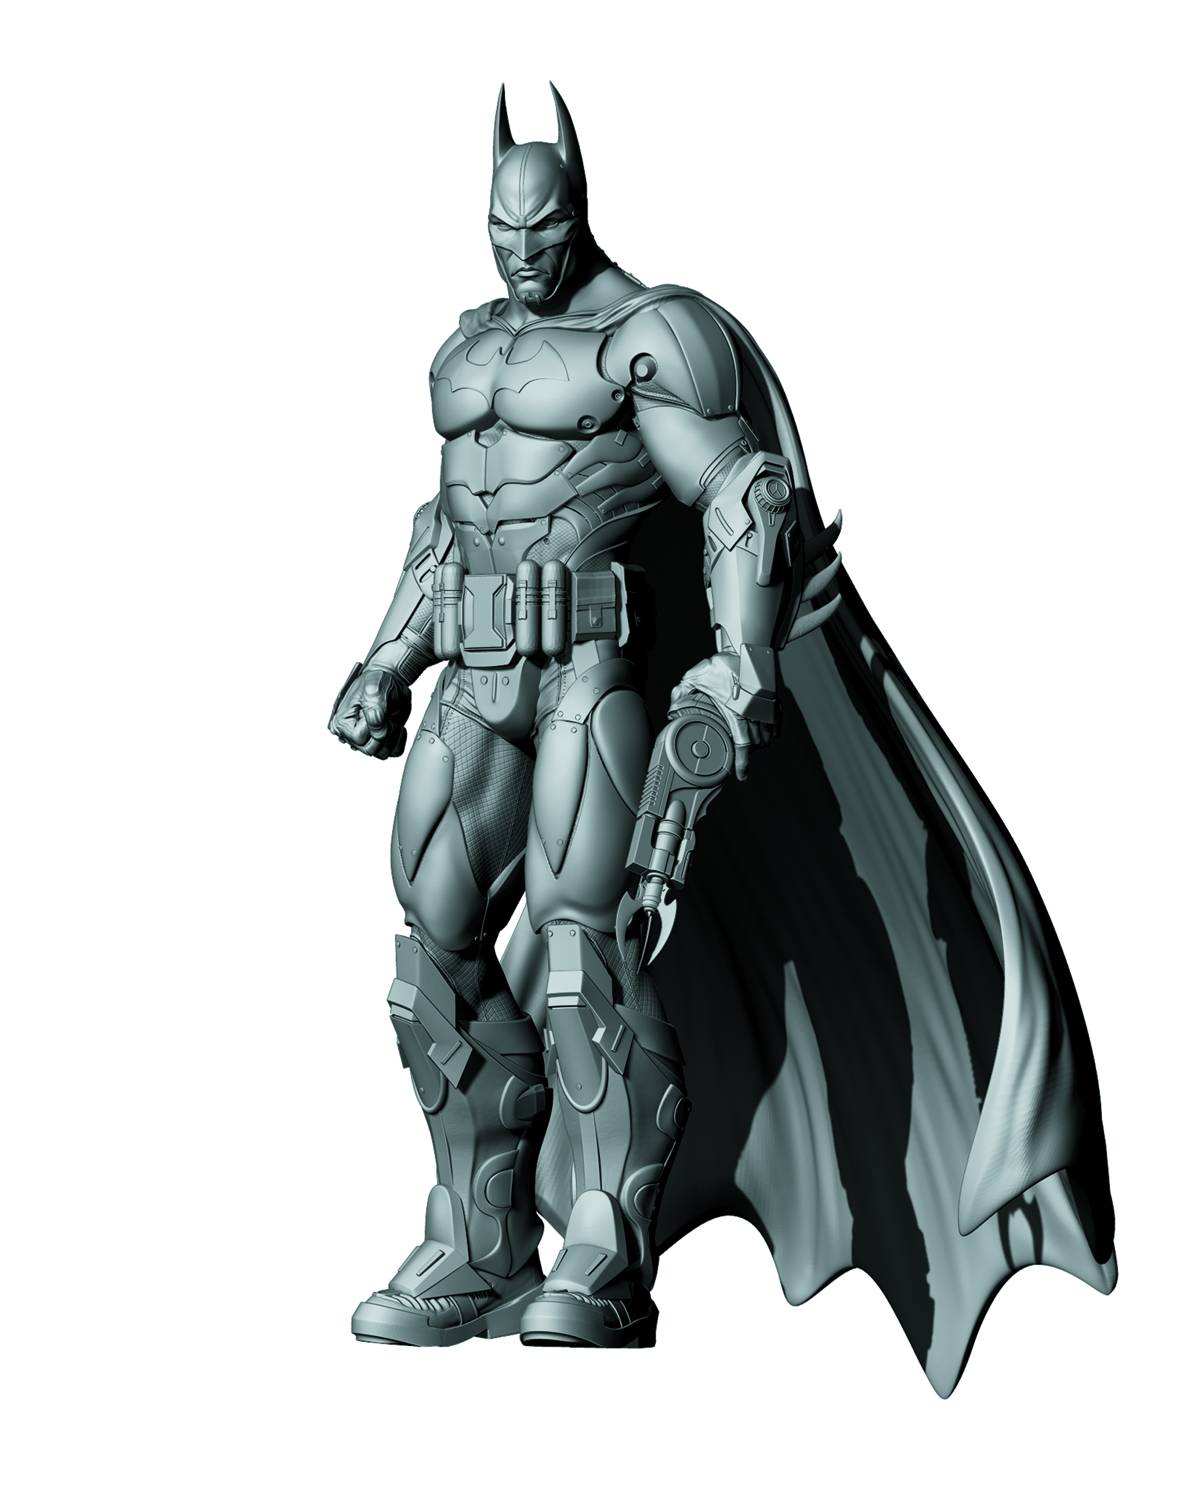 Batman Arkham Asylum Series 2 Batman Action Figure [Armored] 